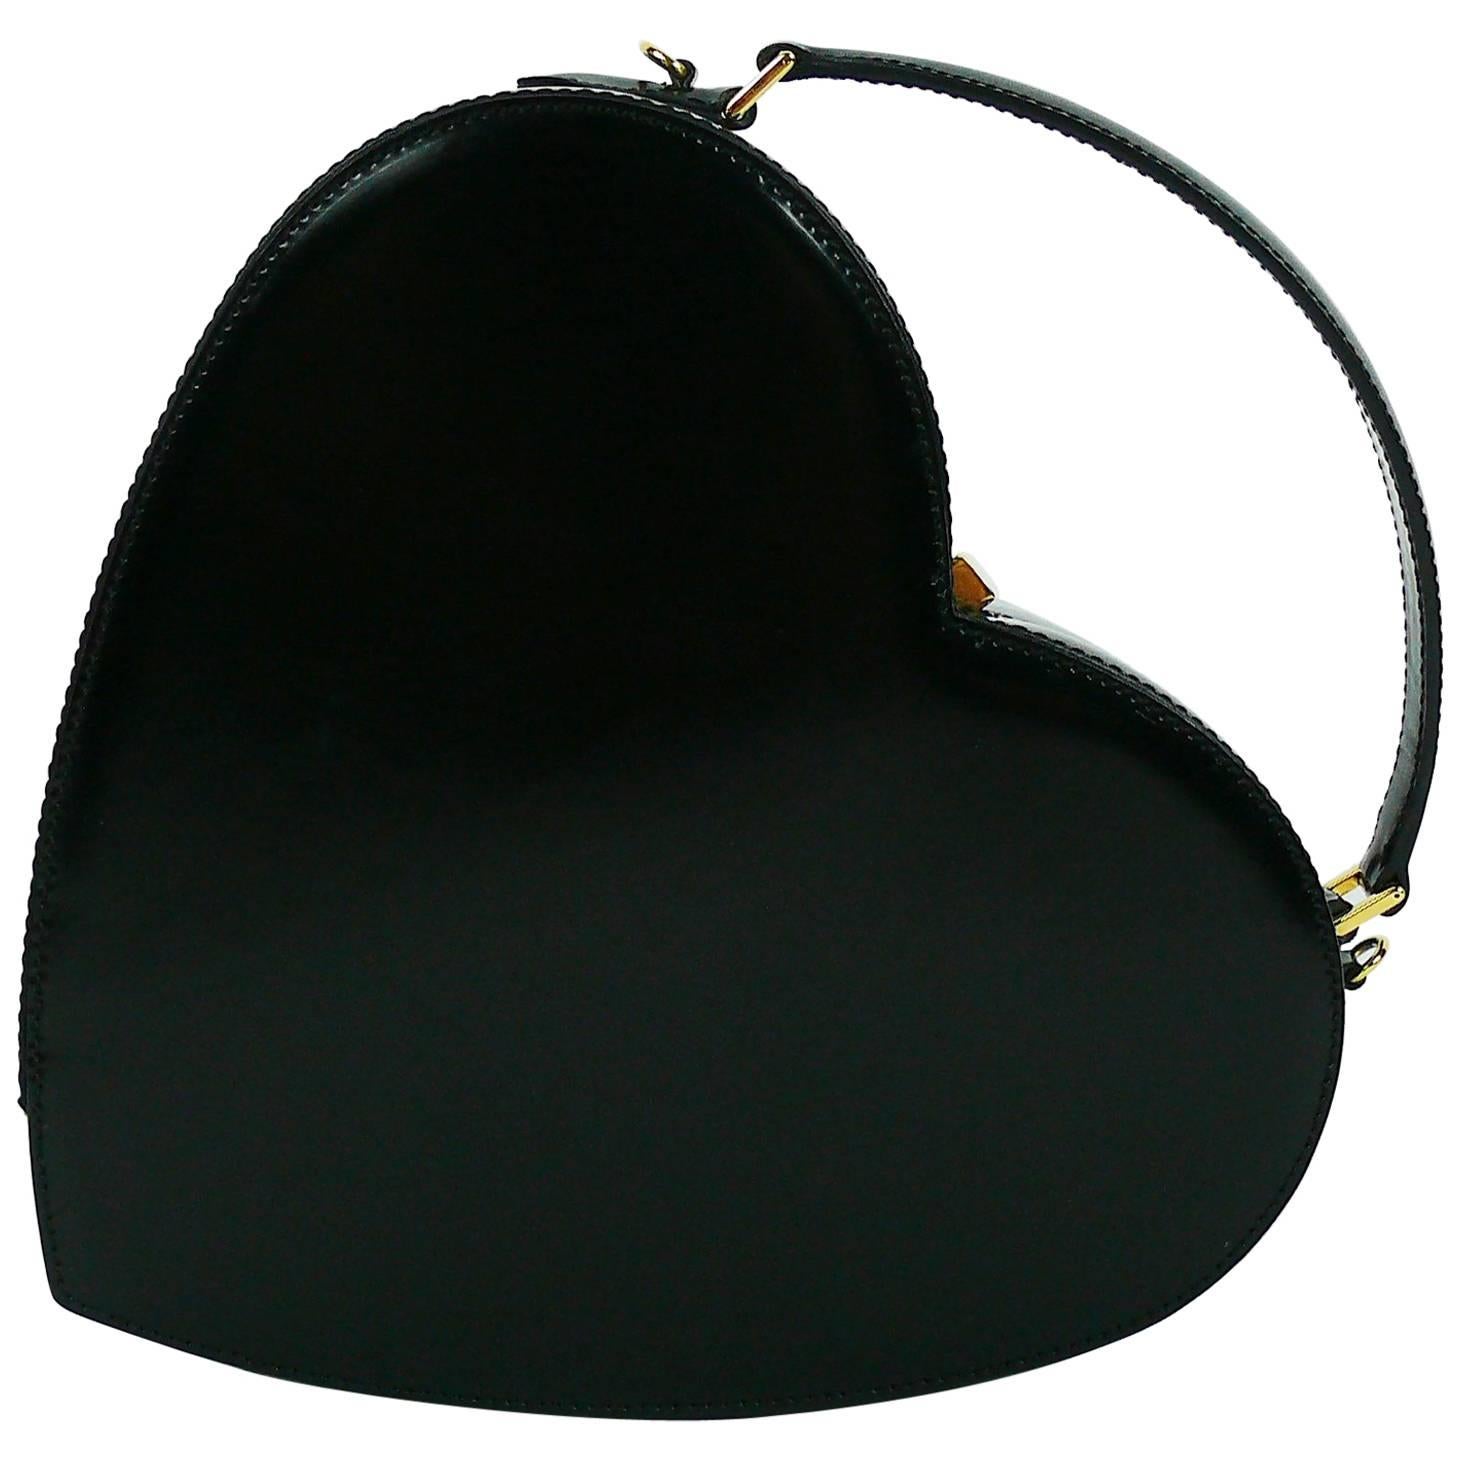 moschino heart shaped bag